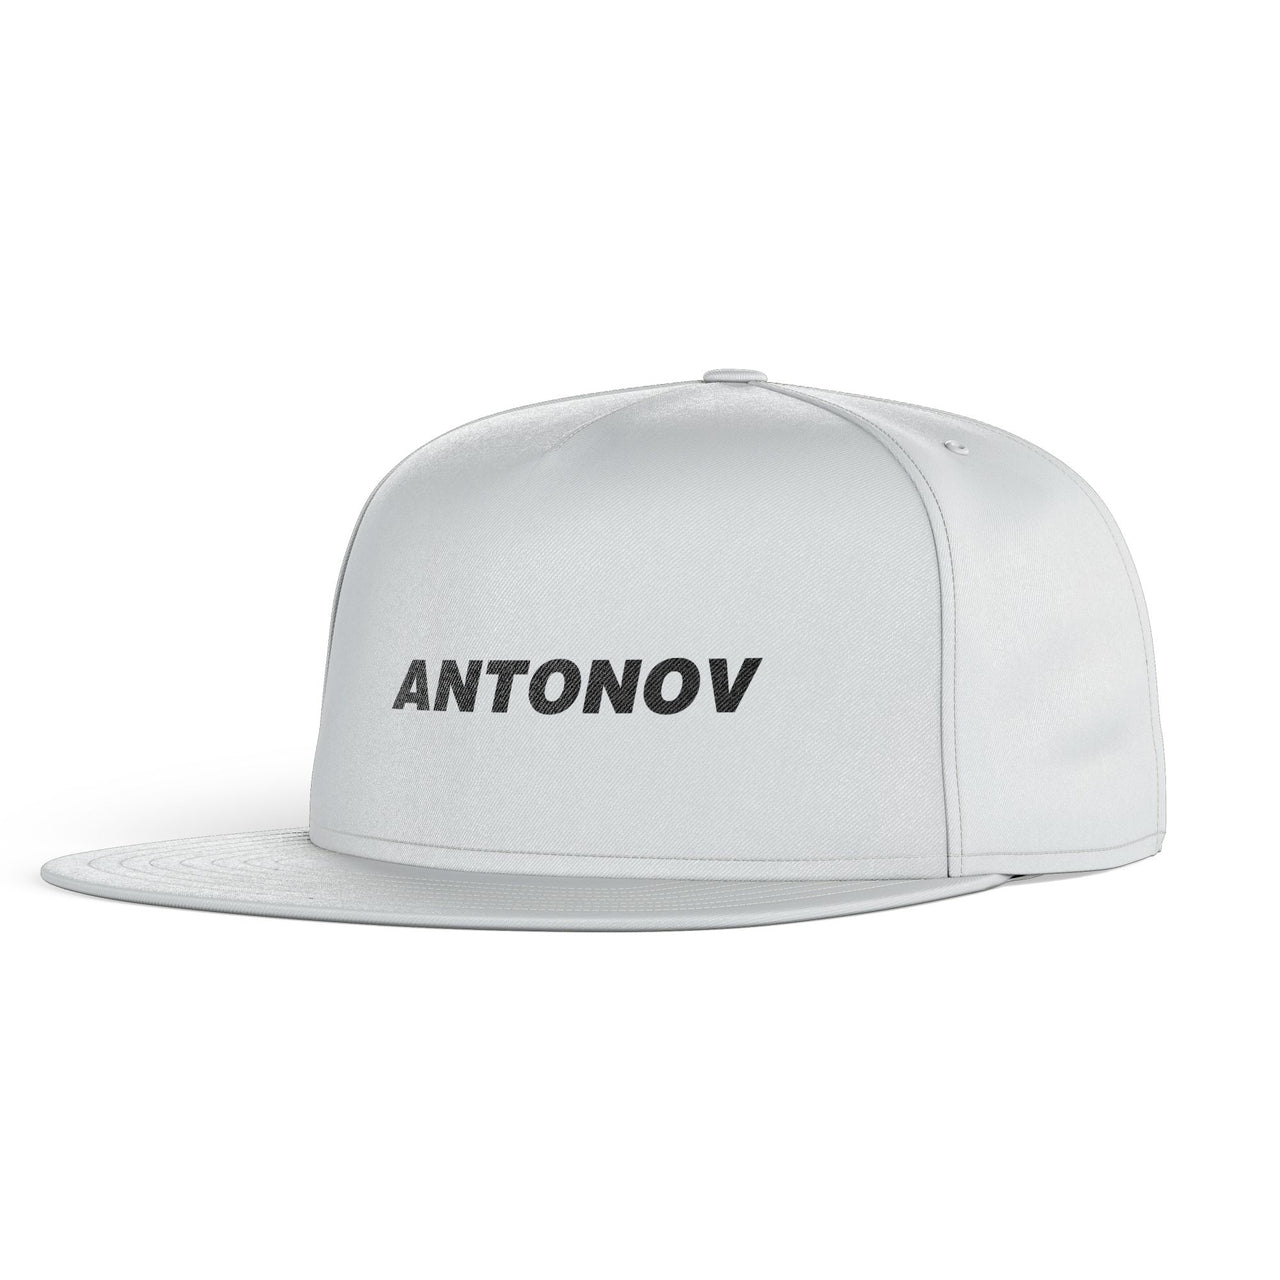 Antonov & Text Designed Snapback Caps & Hats